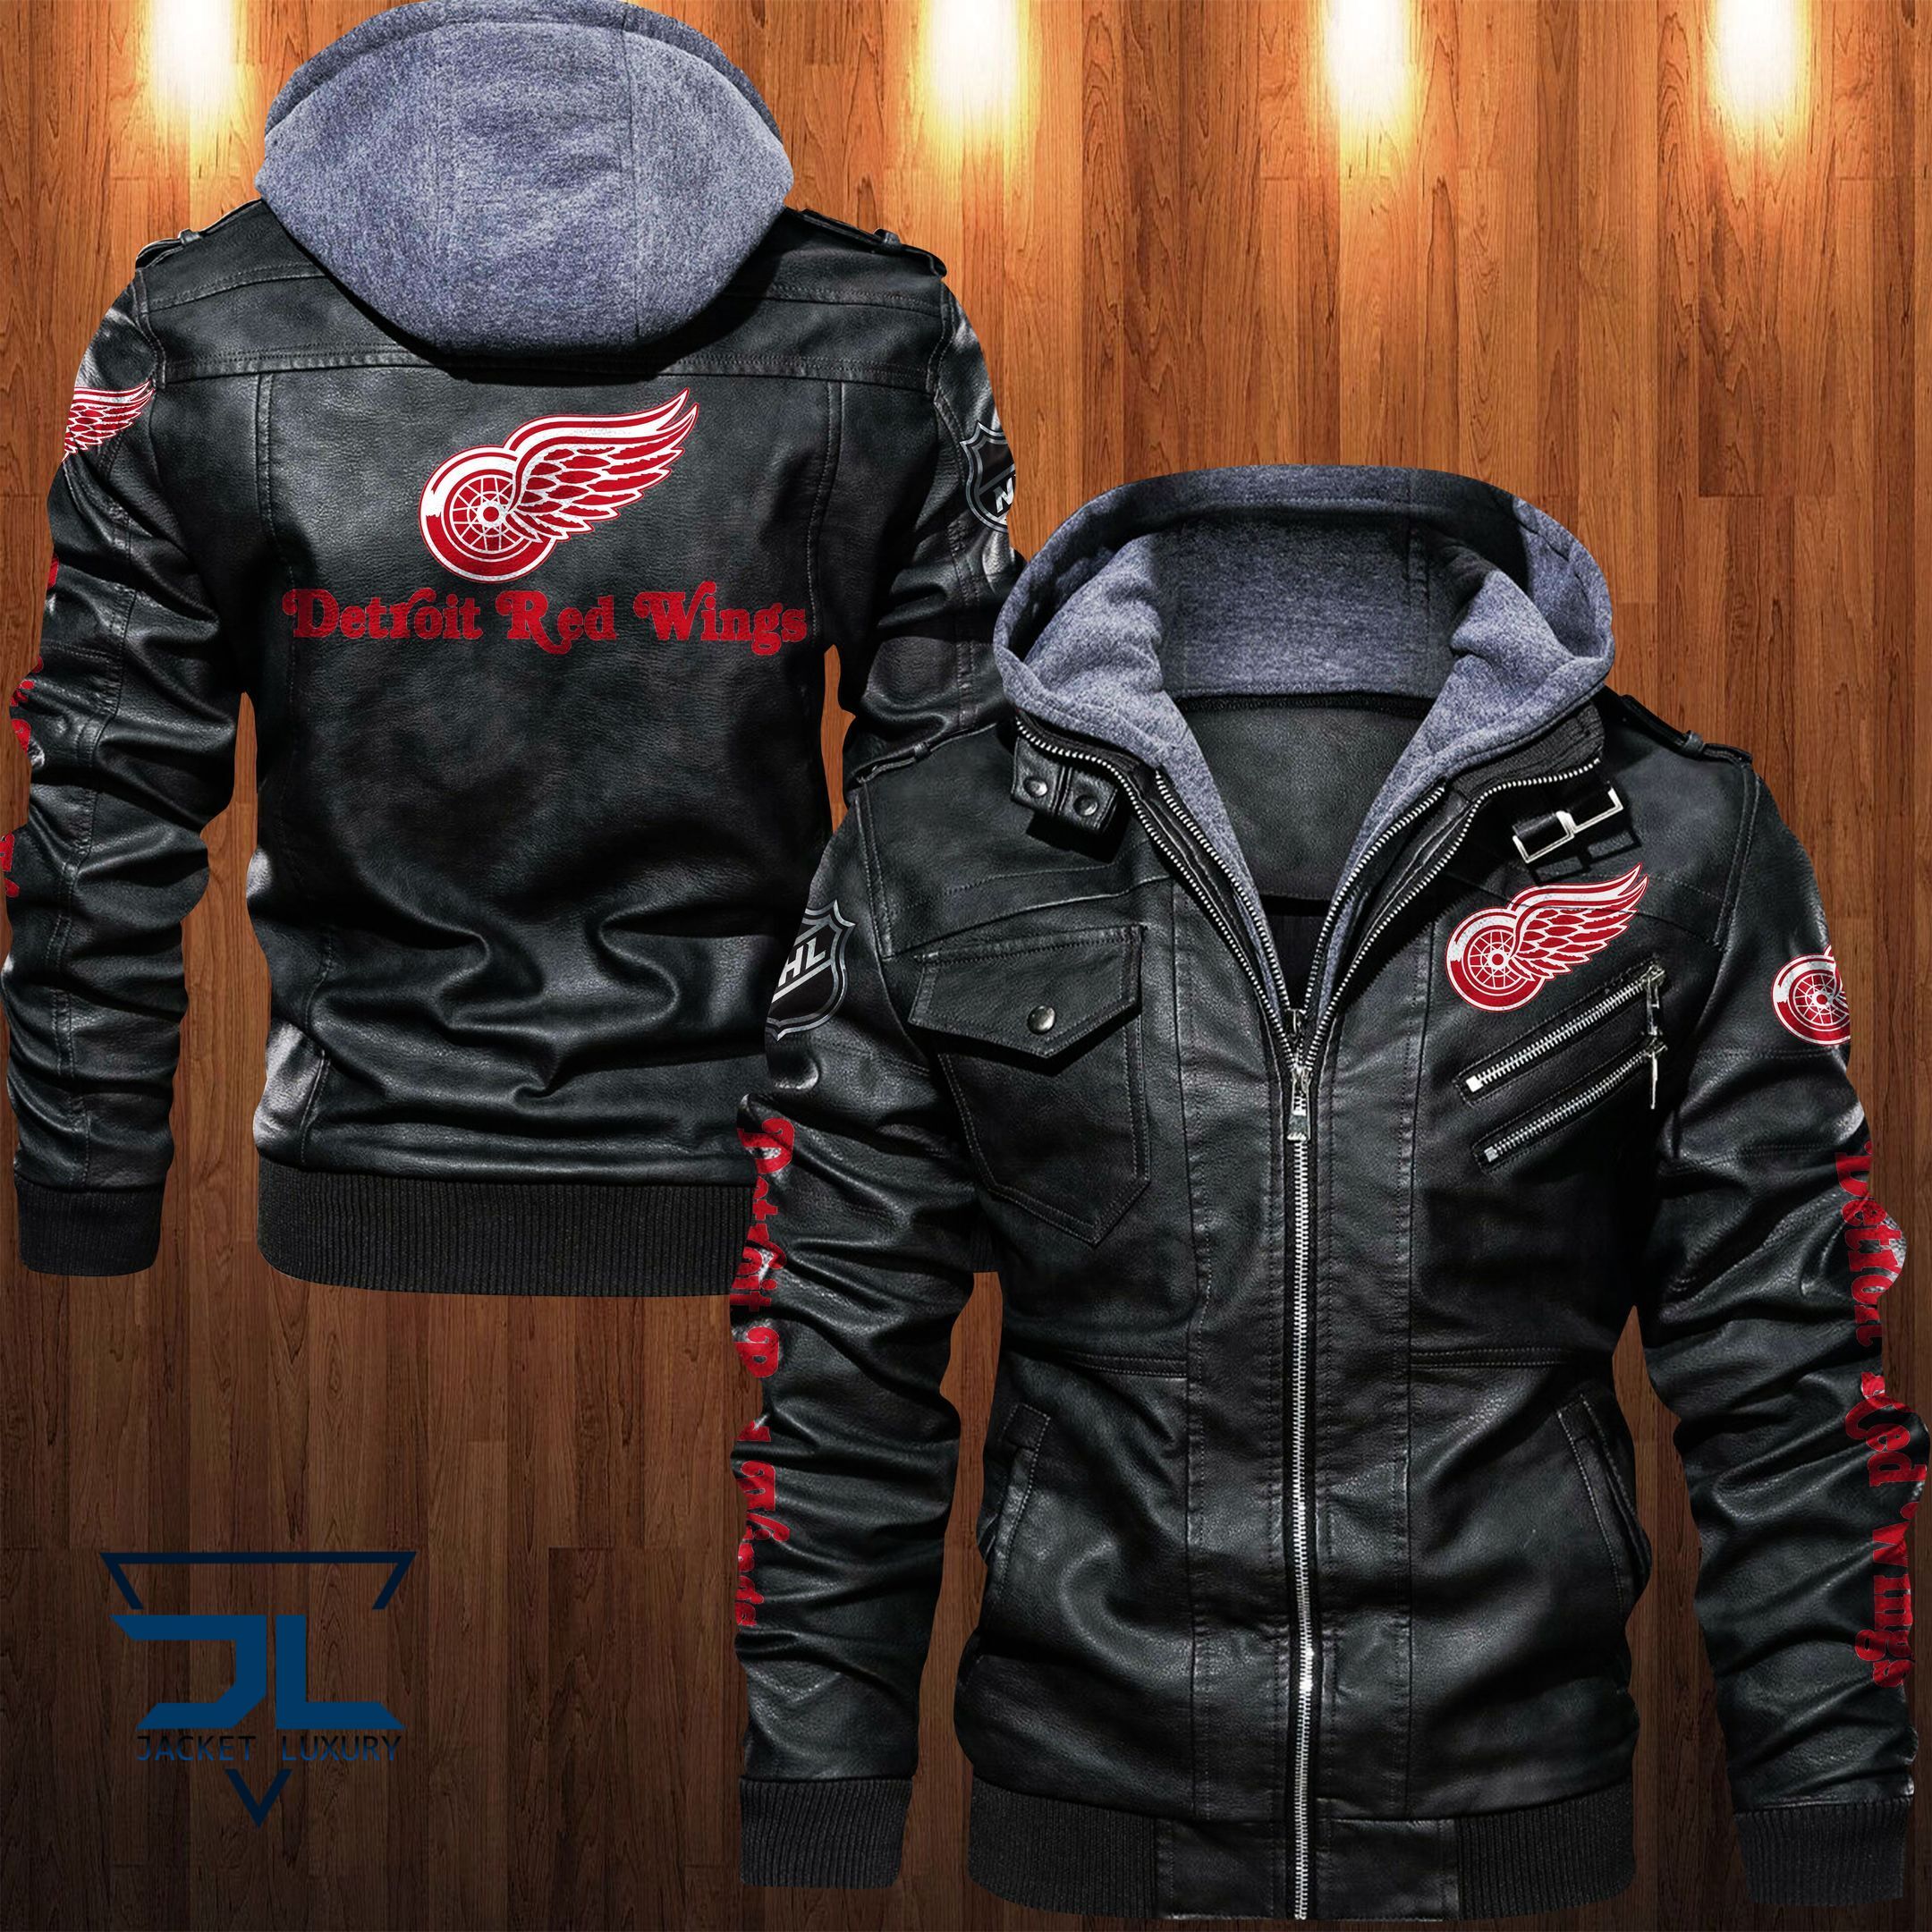 What Leather jacket Sells Best on Techcomshop? 196